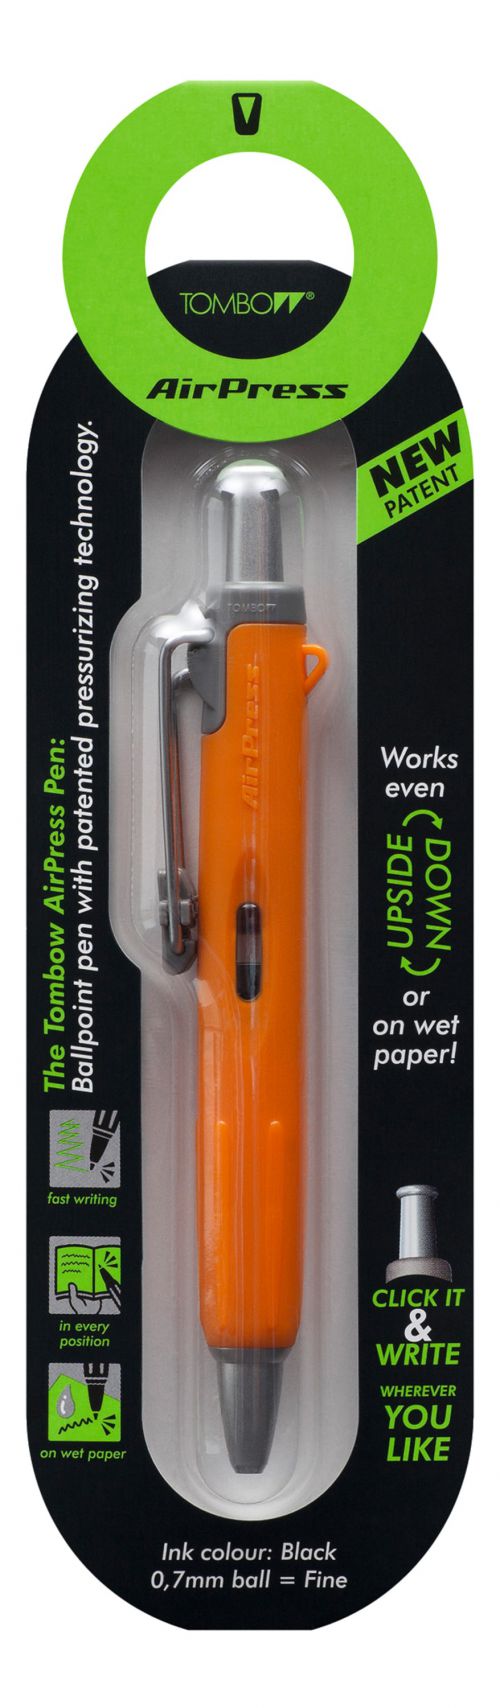 Tombow AirPress Retractable Ballpoint Pen 0.7mm Tip Orange Barrel Black Ink - BC-AP54